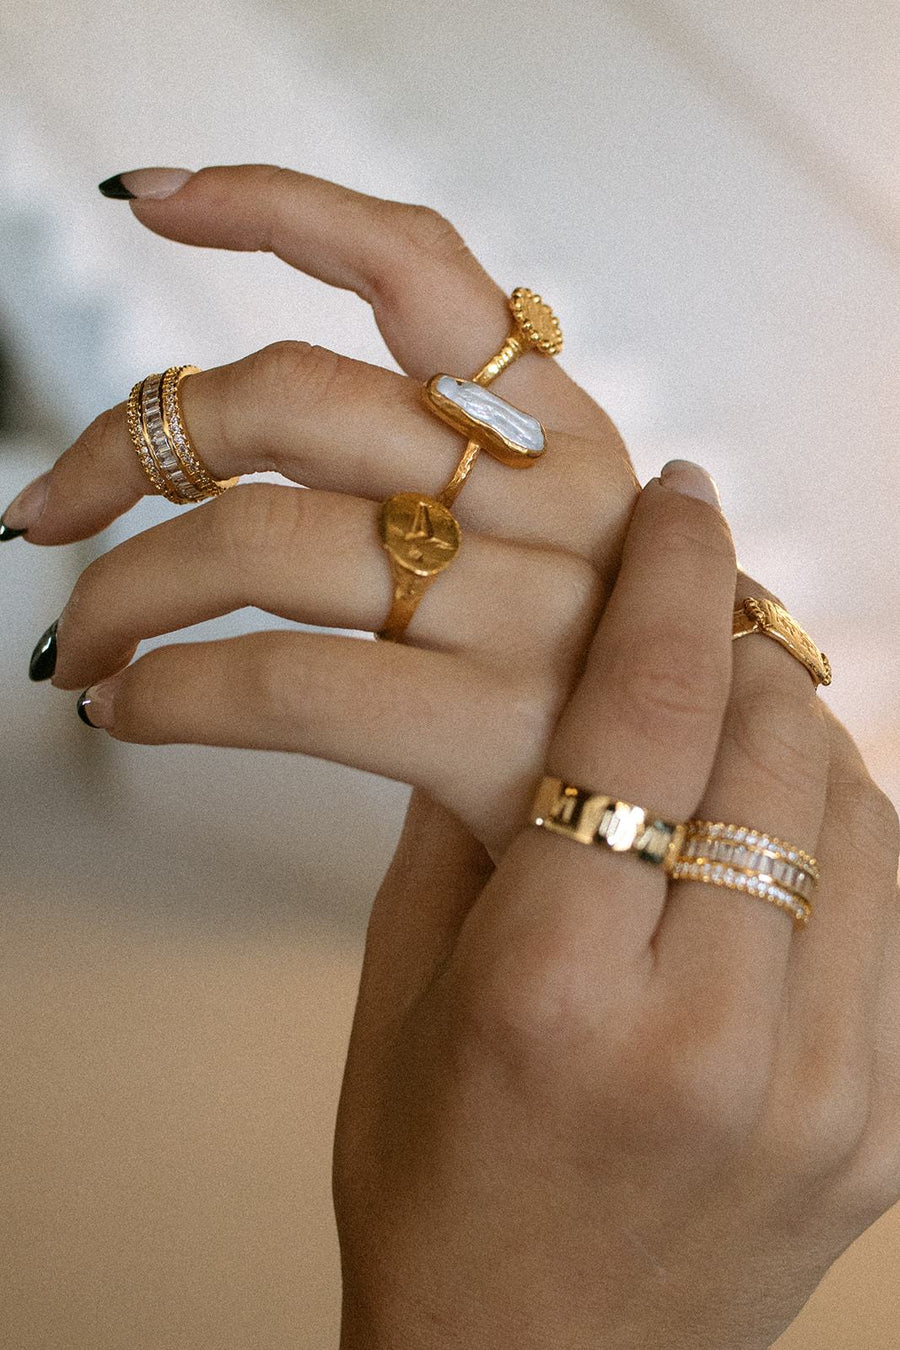 Cleopatra's Bling Jewelry Peristera Ring